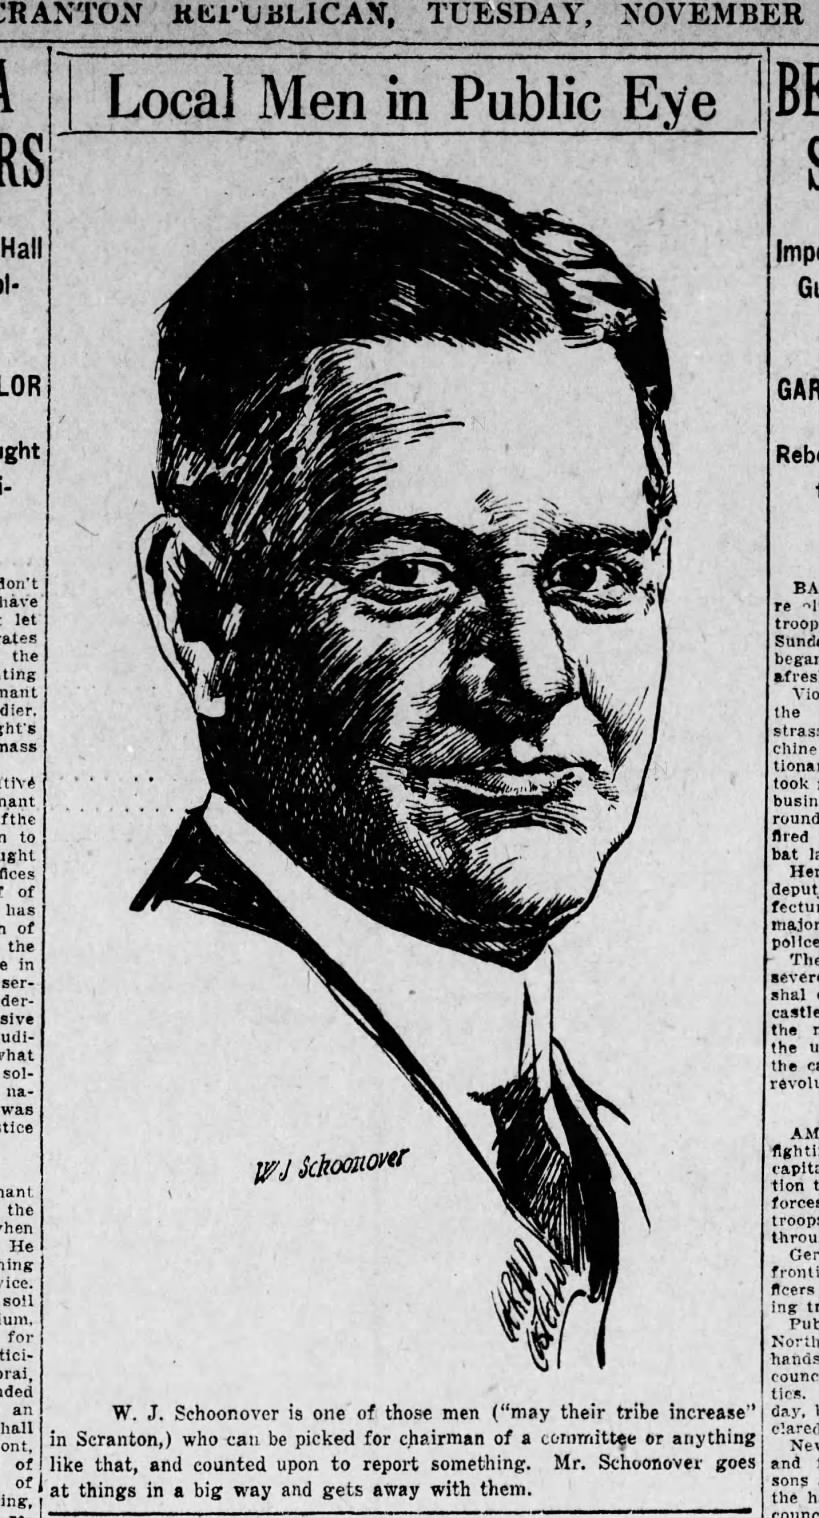 Jerry Costello Portrait of W J Schoonover Scr Rep Nov 12 1918 pg 14